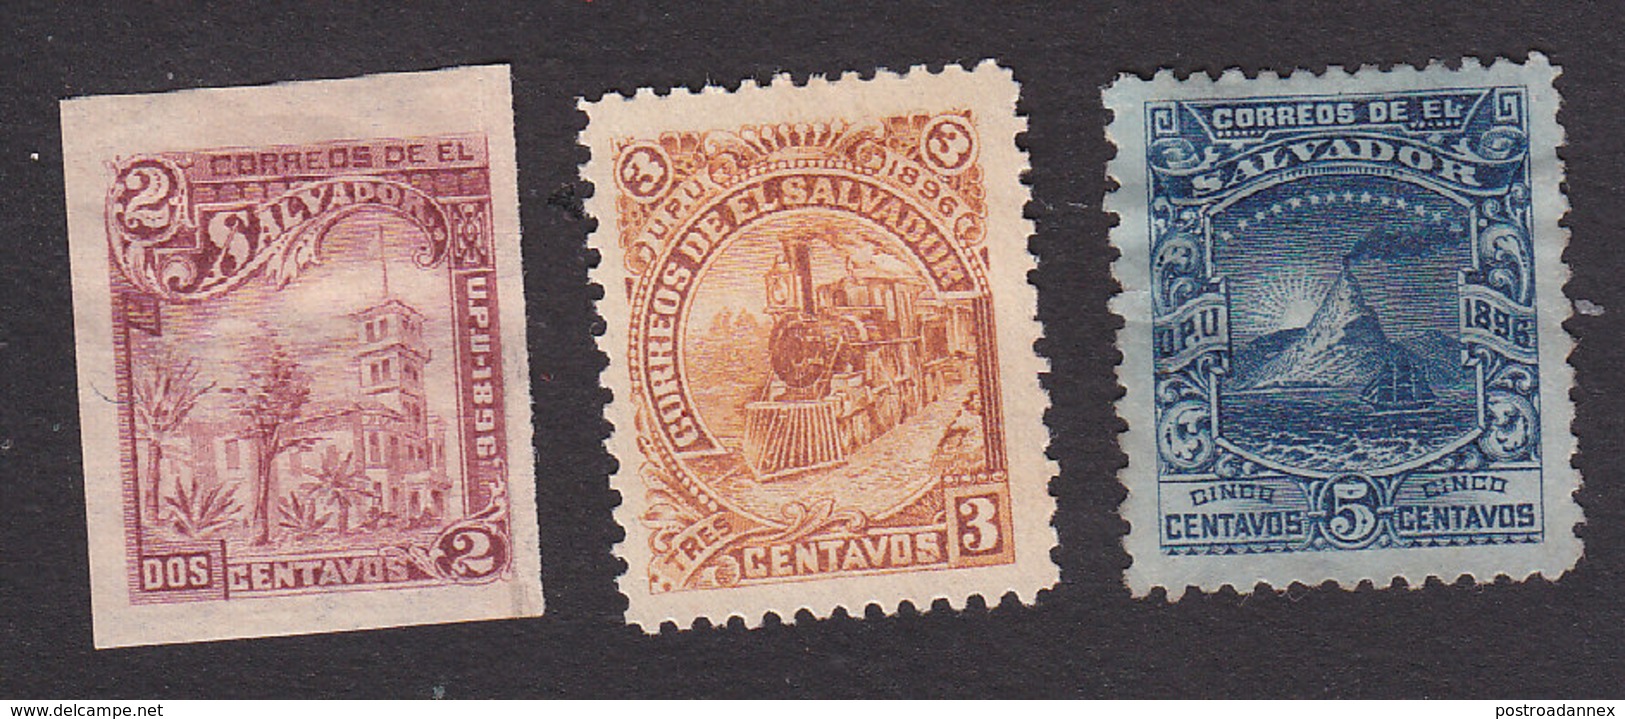 El Salvador, Scott #147-149, Mint Hinged/No Gum, White House, Locomotive, Mt San Miguel, Issued 1896 - El Salvador